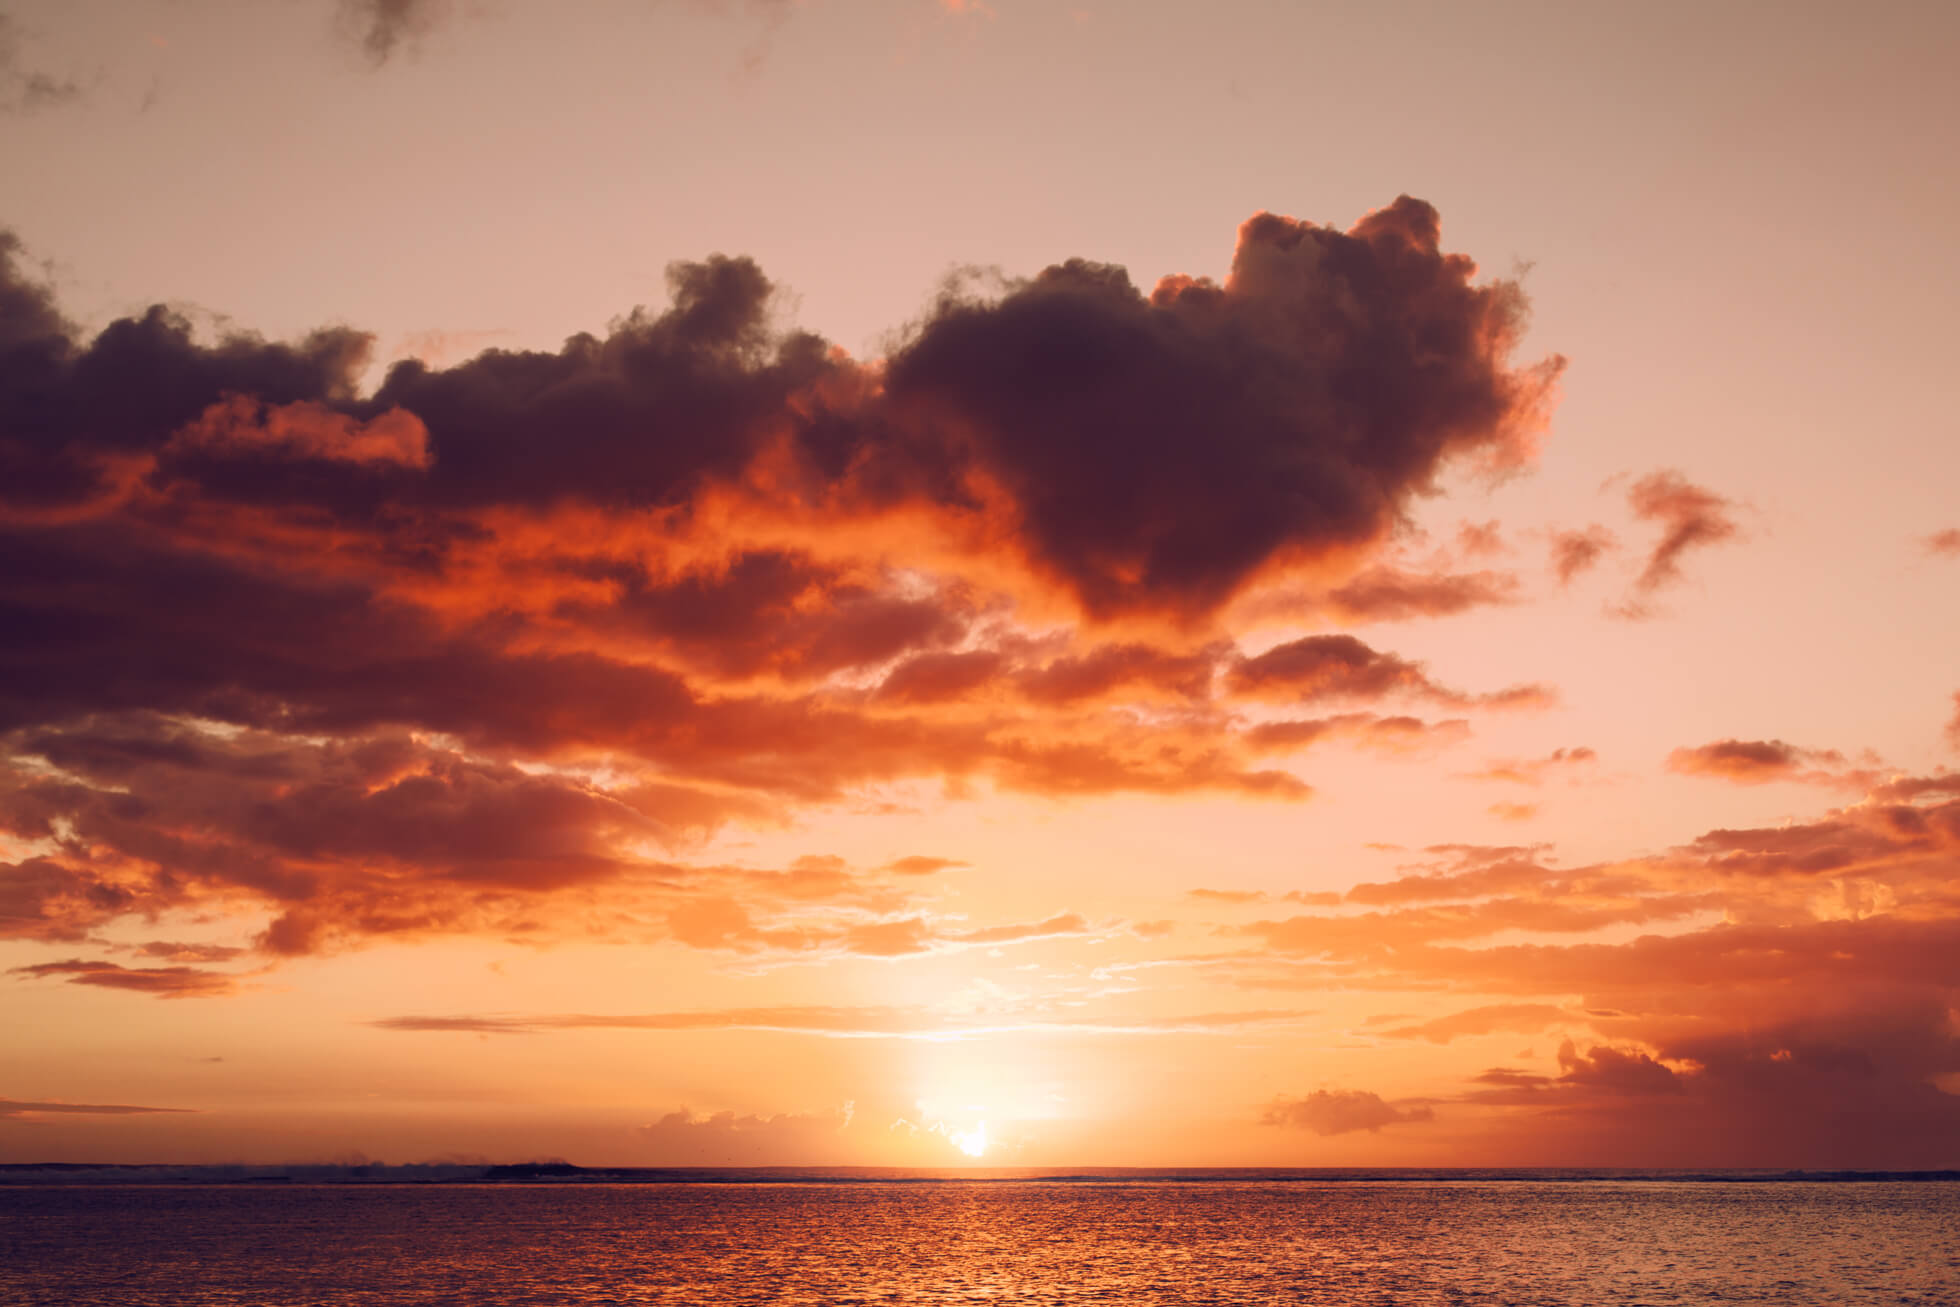 4_MG_8813-Edit - Mauritius sunset by Fabian Wester_